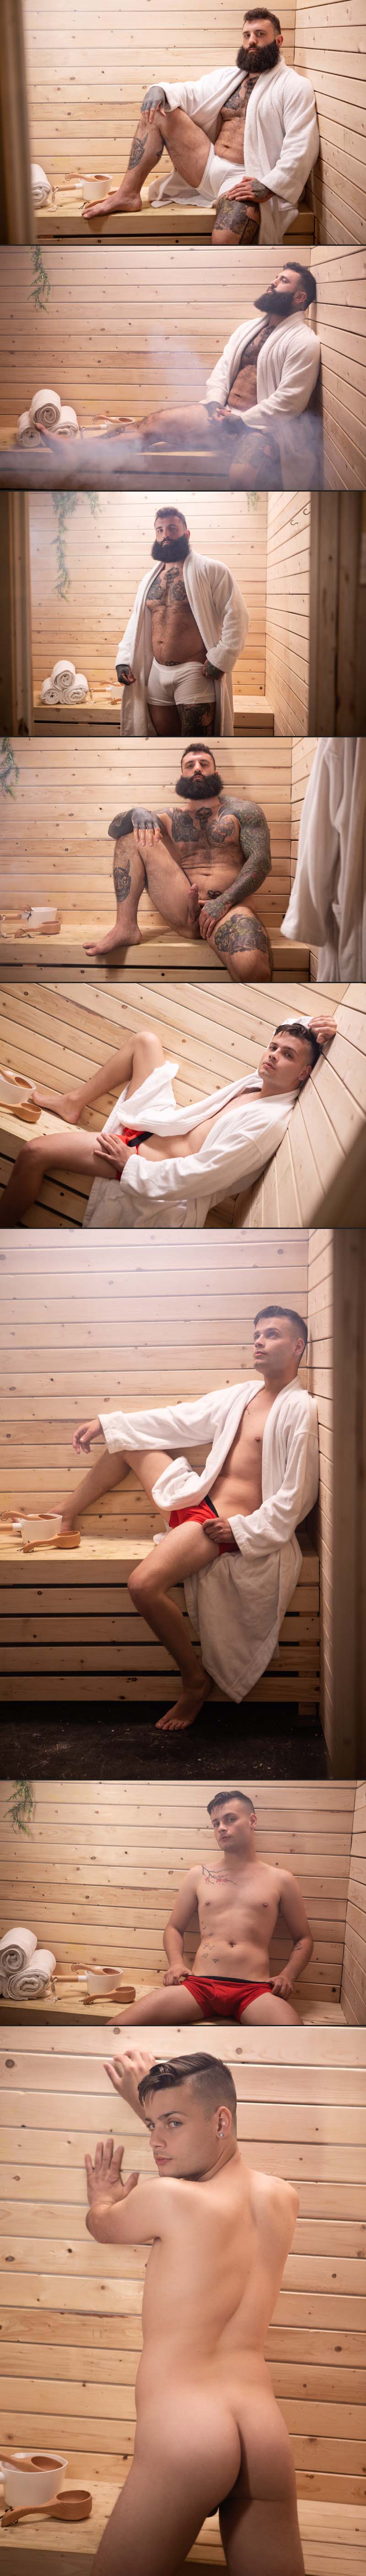 Sauna Submission (Markus Kage Fucks Ryan Bailey) at MEN.com